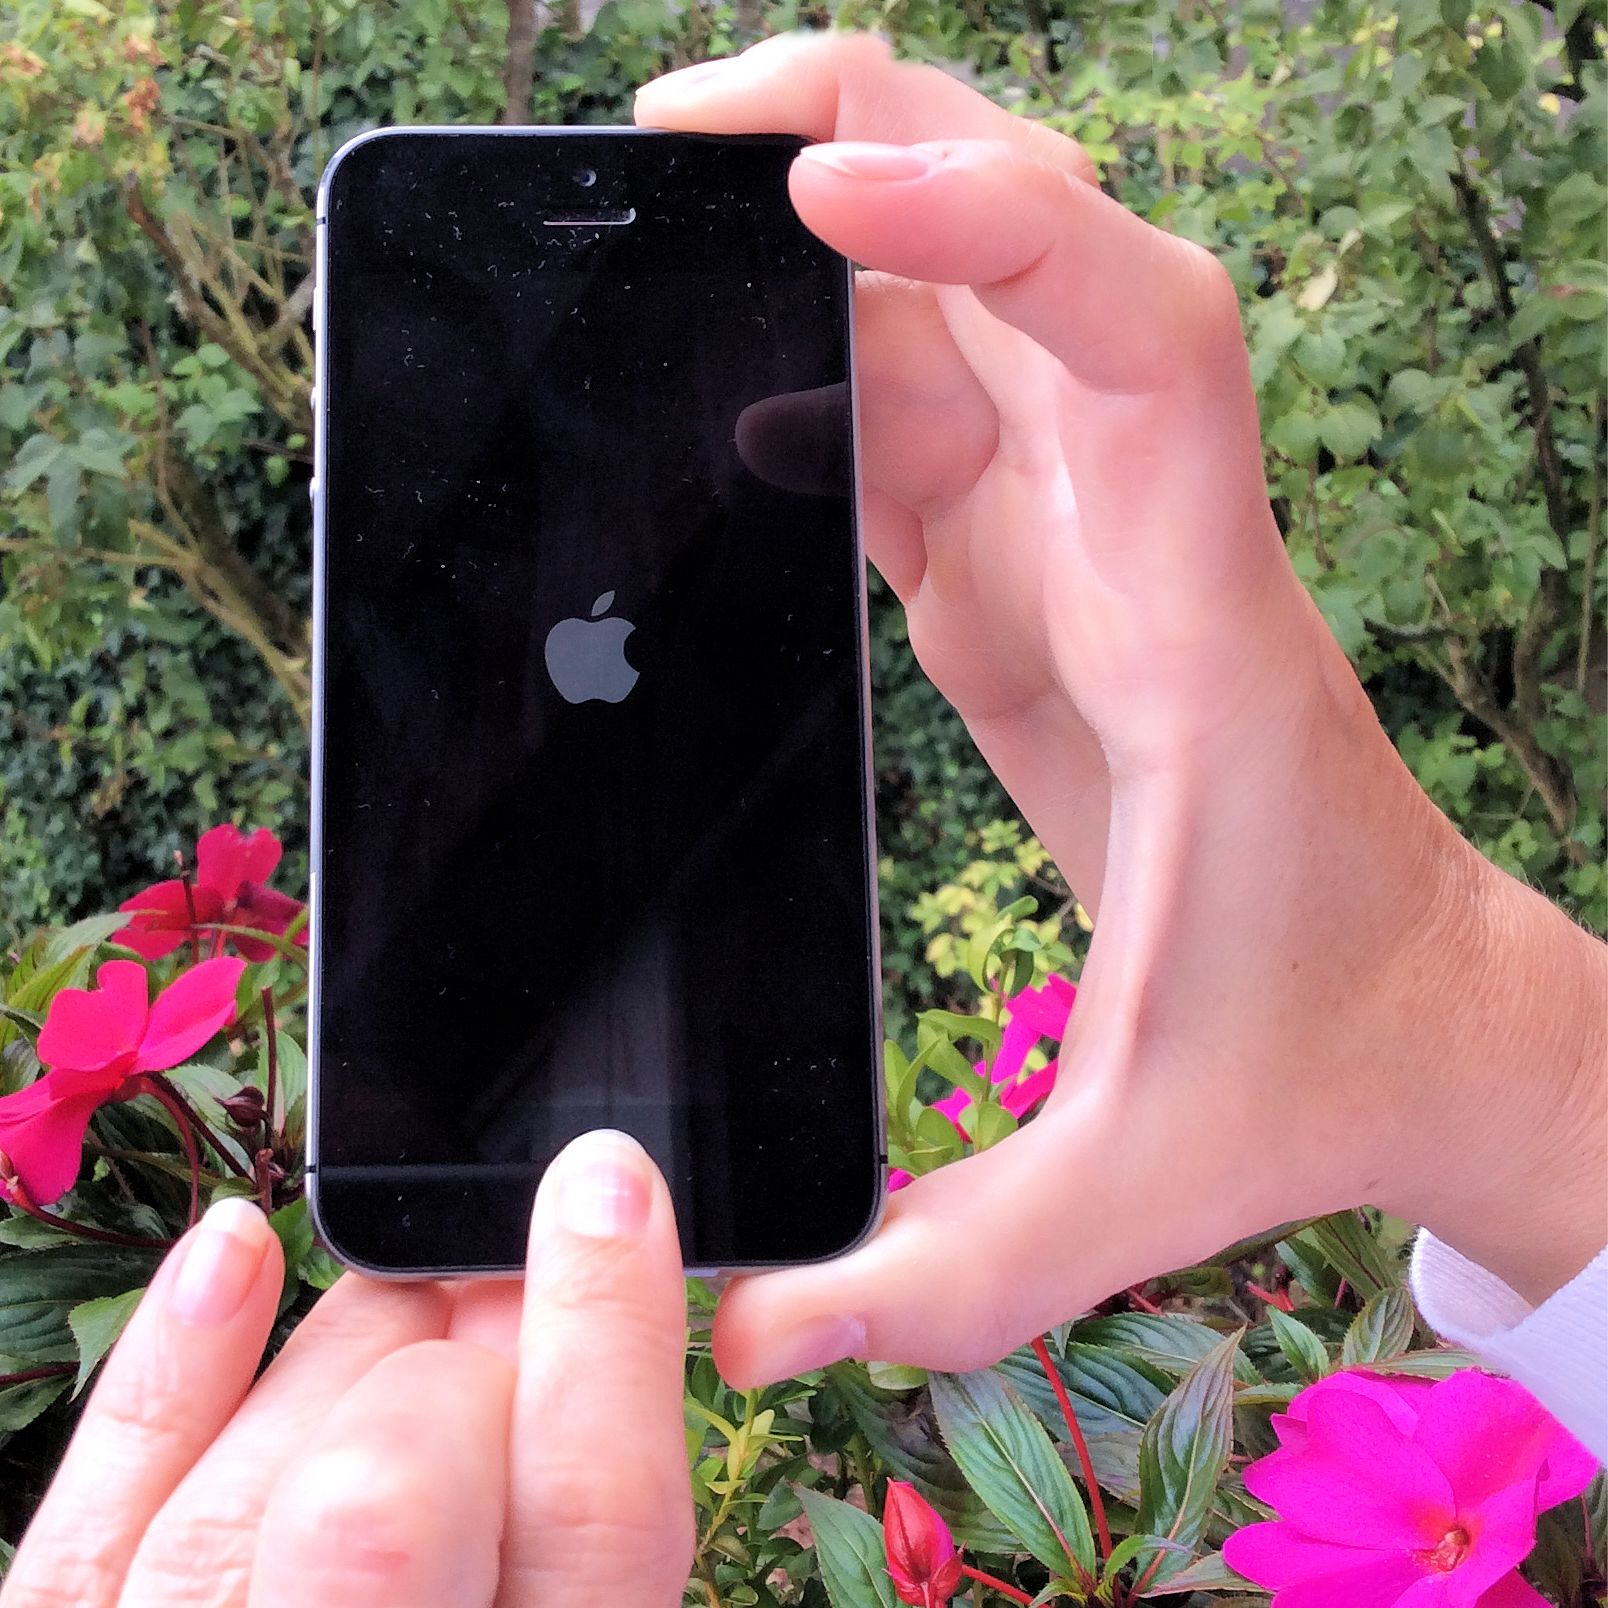 iPhone abgestürzt aufgehängt Hard Reset Bildschirm dunkel Apple Logo Apfel